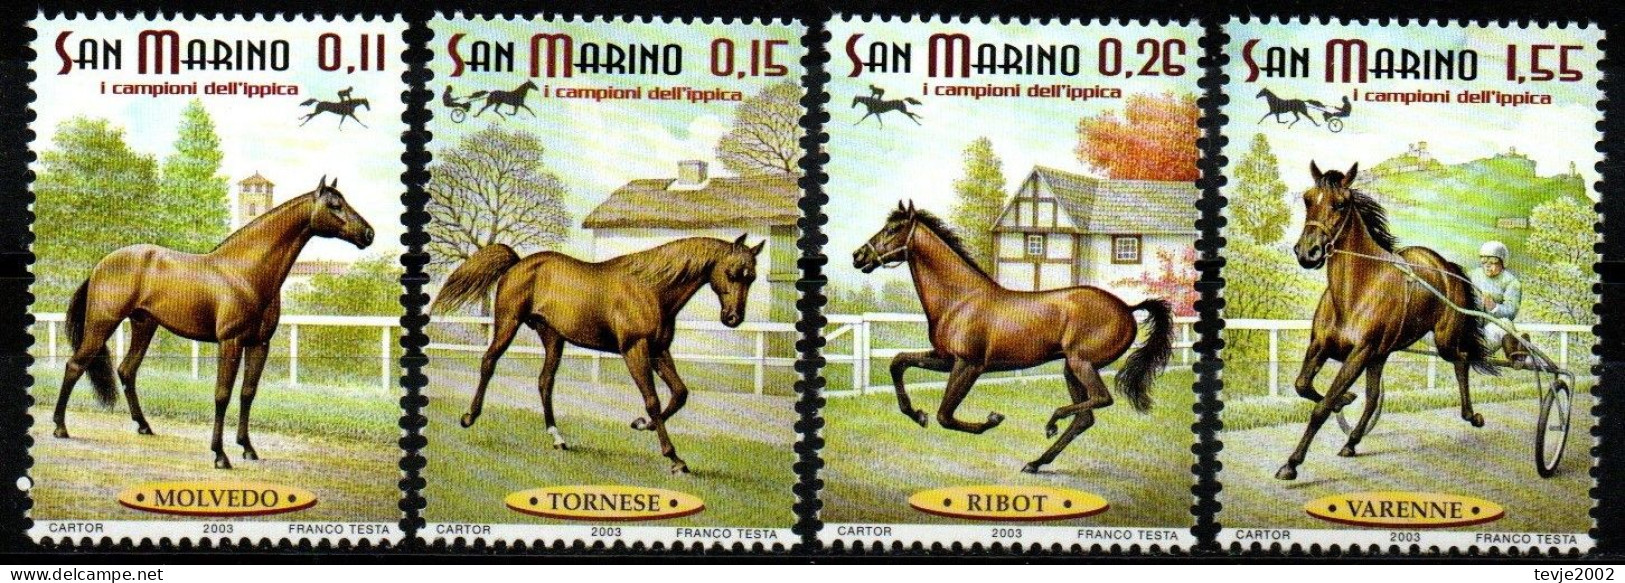 San Marino 2003 - Mi.Nr. 2087 - 2090 - Postfrisch MNH - Tiere Animals Pferde Horses - Horses